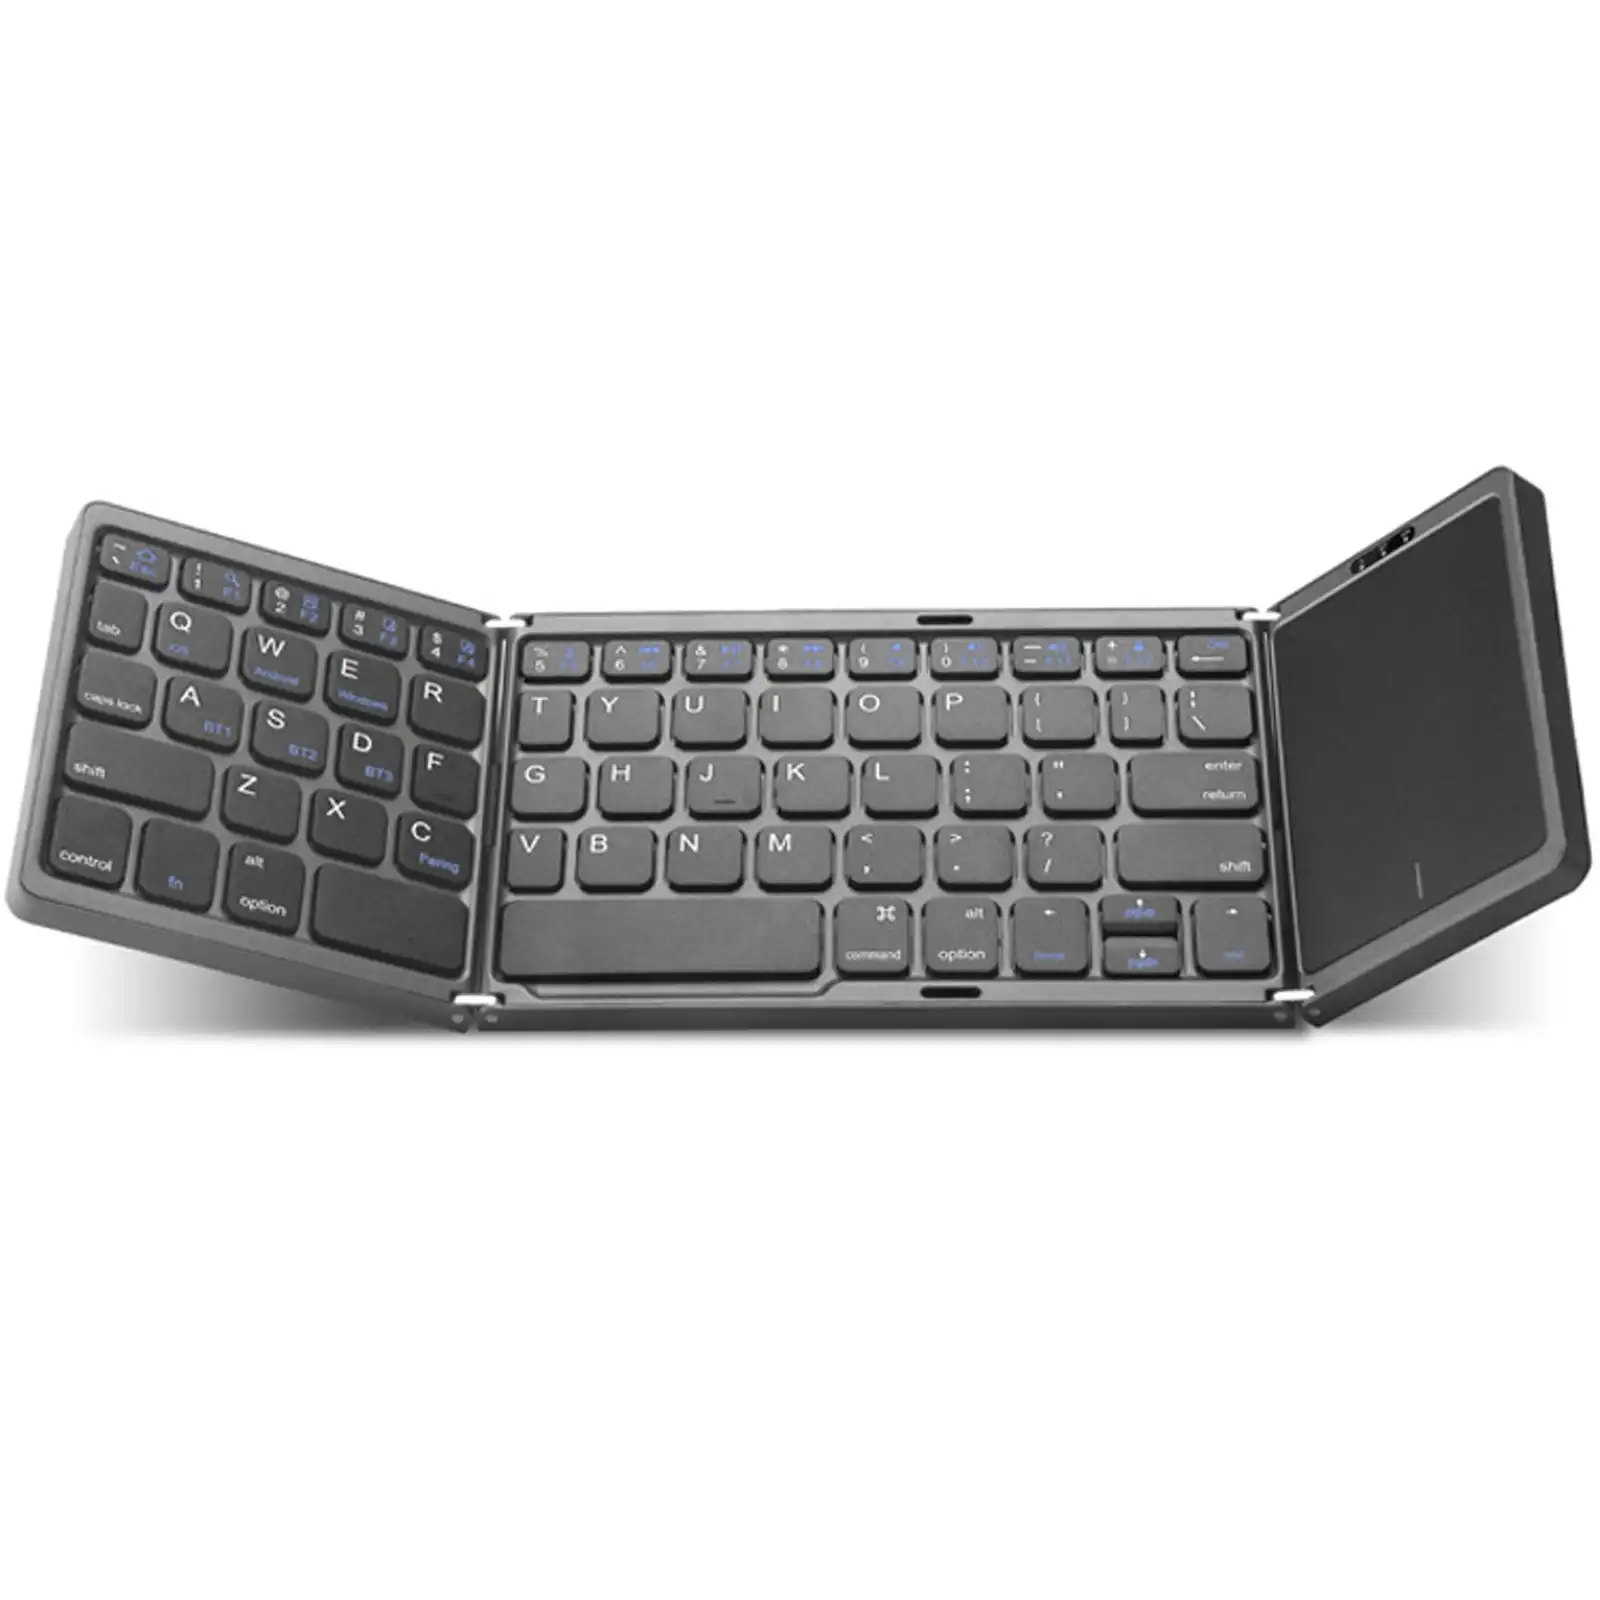 TODO Folding Bluetooth Wireless Keyboard Touchpad BT 5.1 Mac Windows Android - Grey